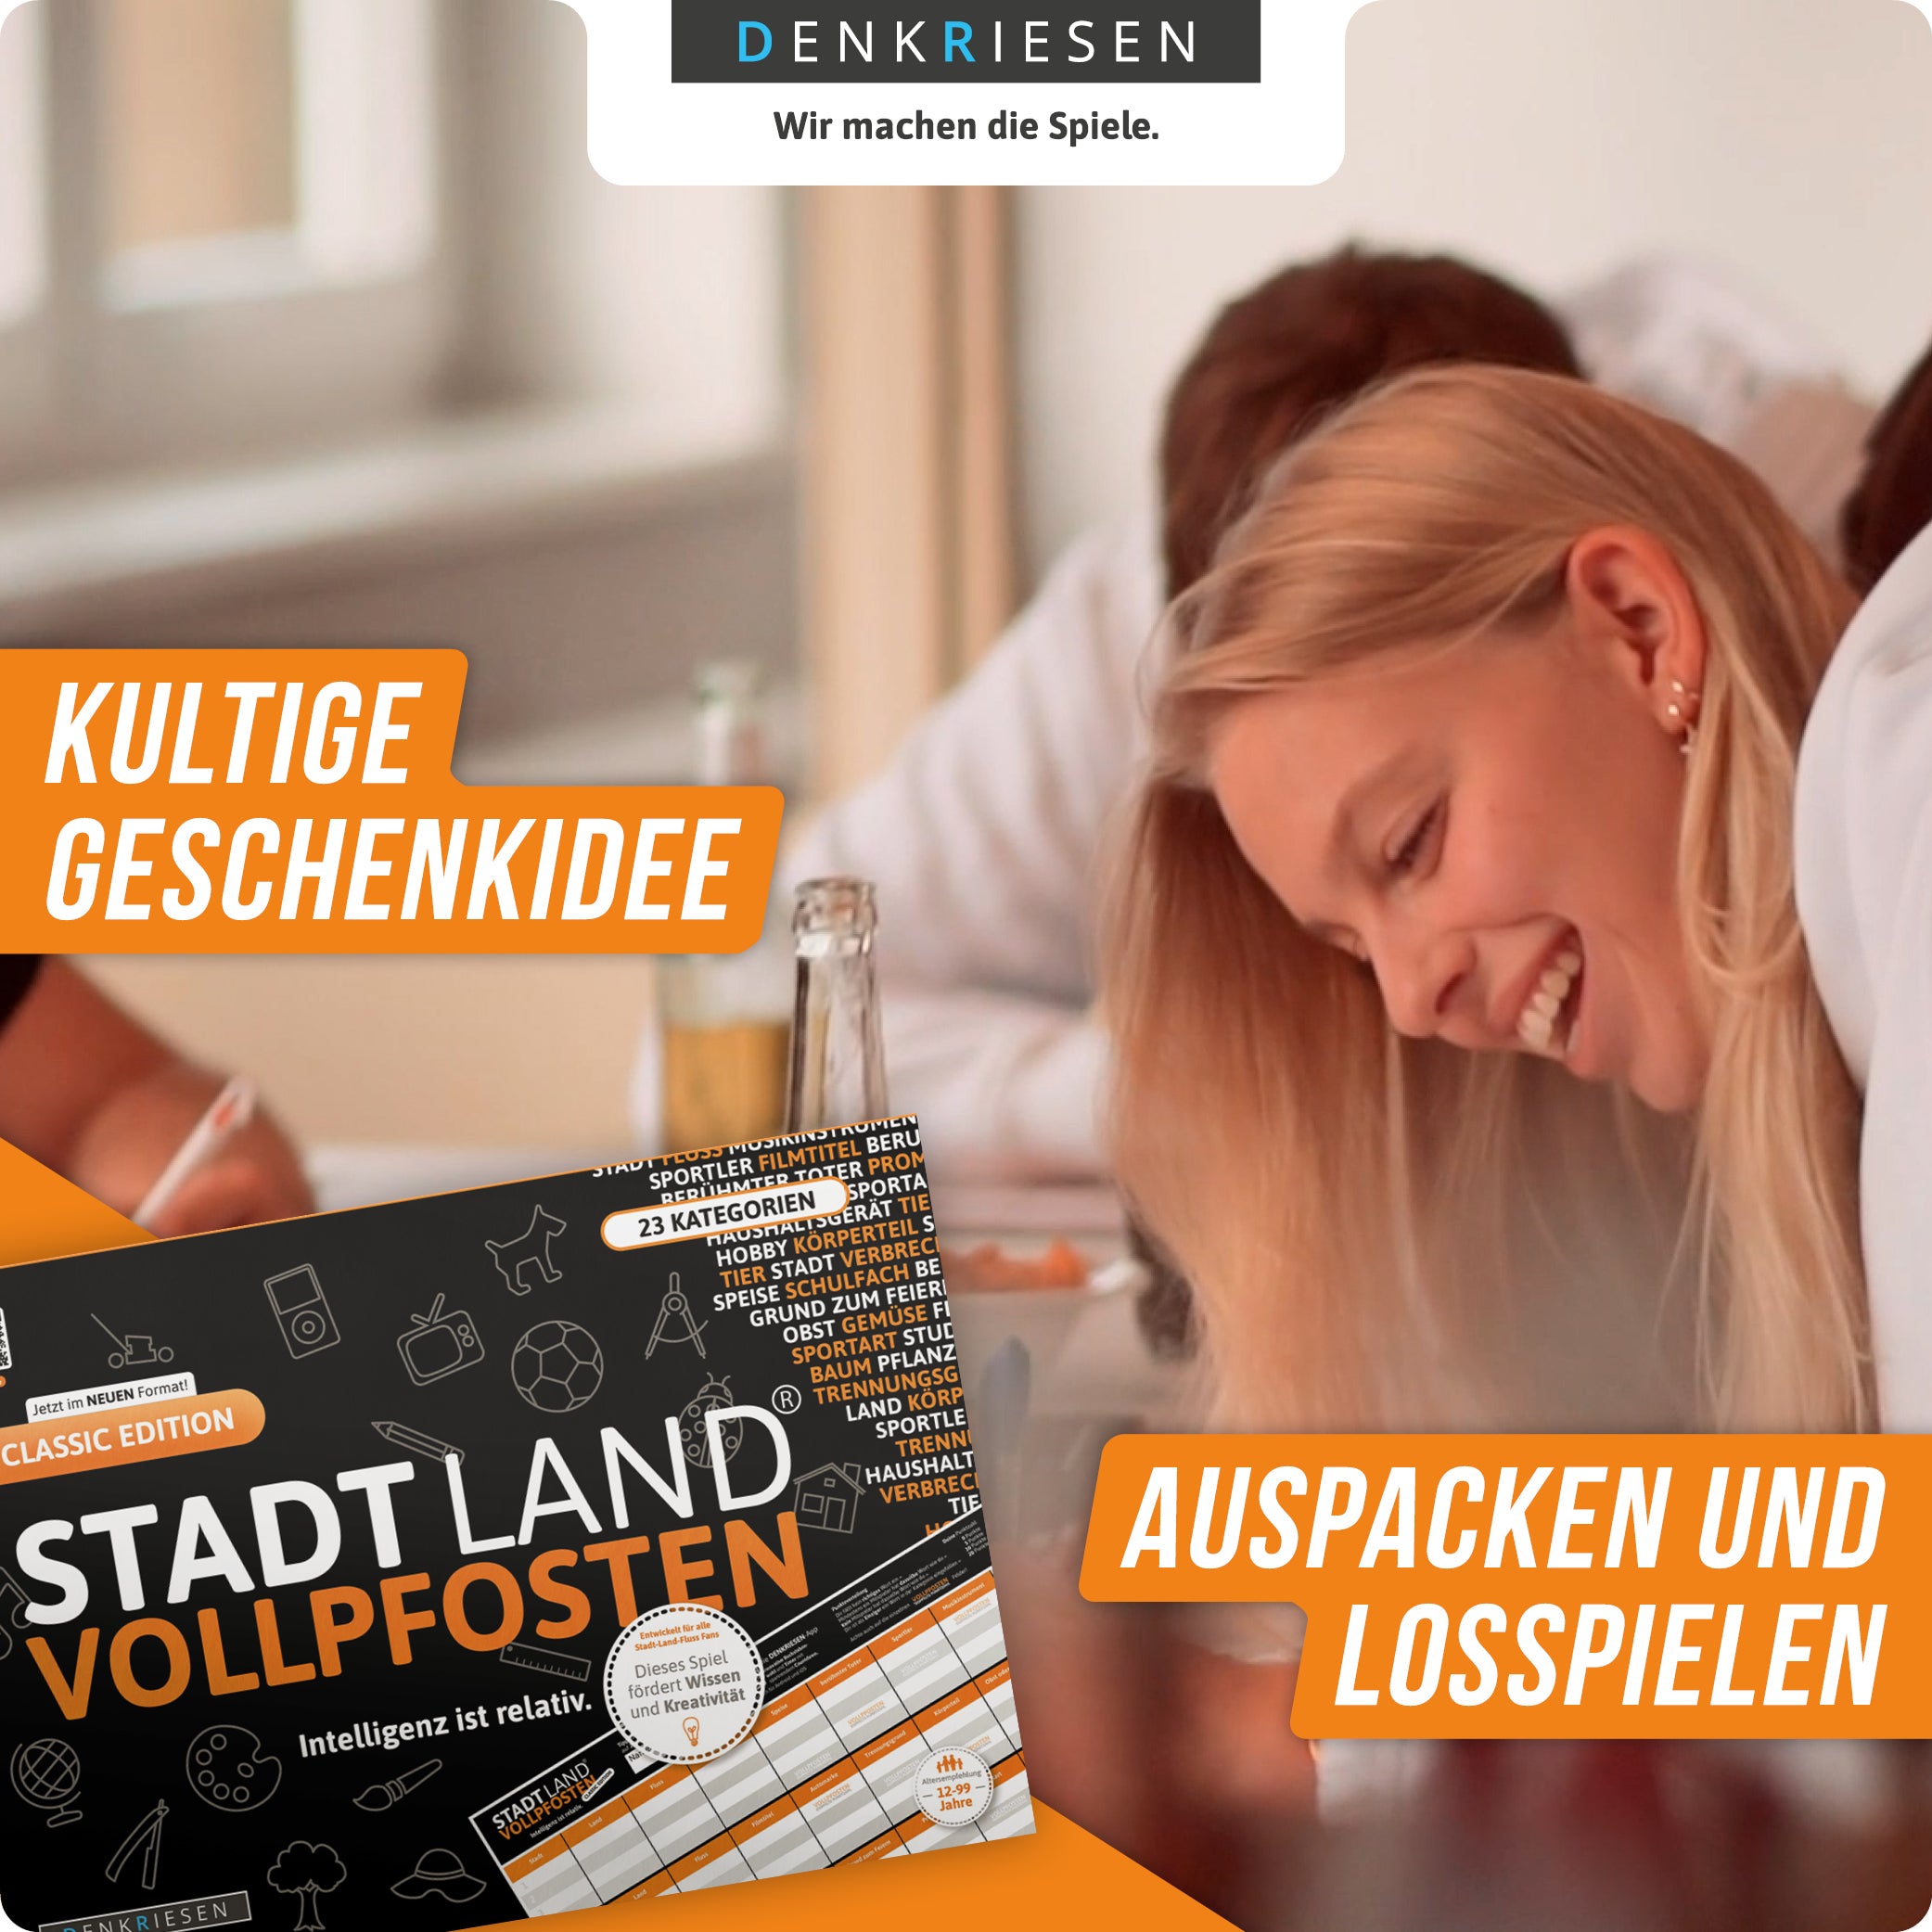 Stadt Land Vollpfosten - Classic Edition DIN A4